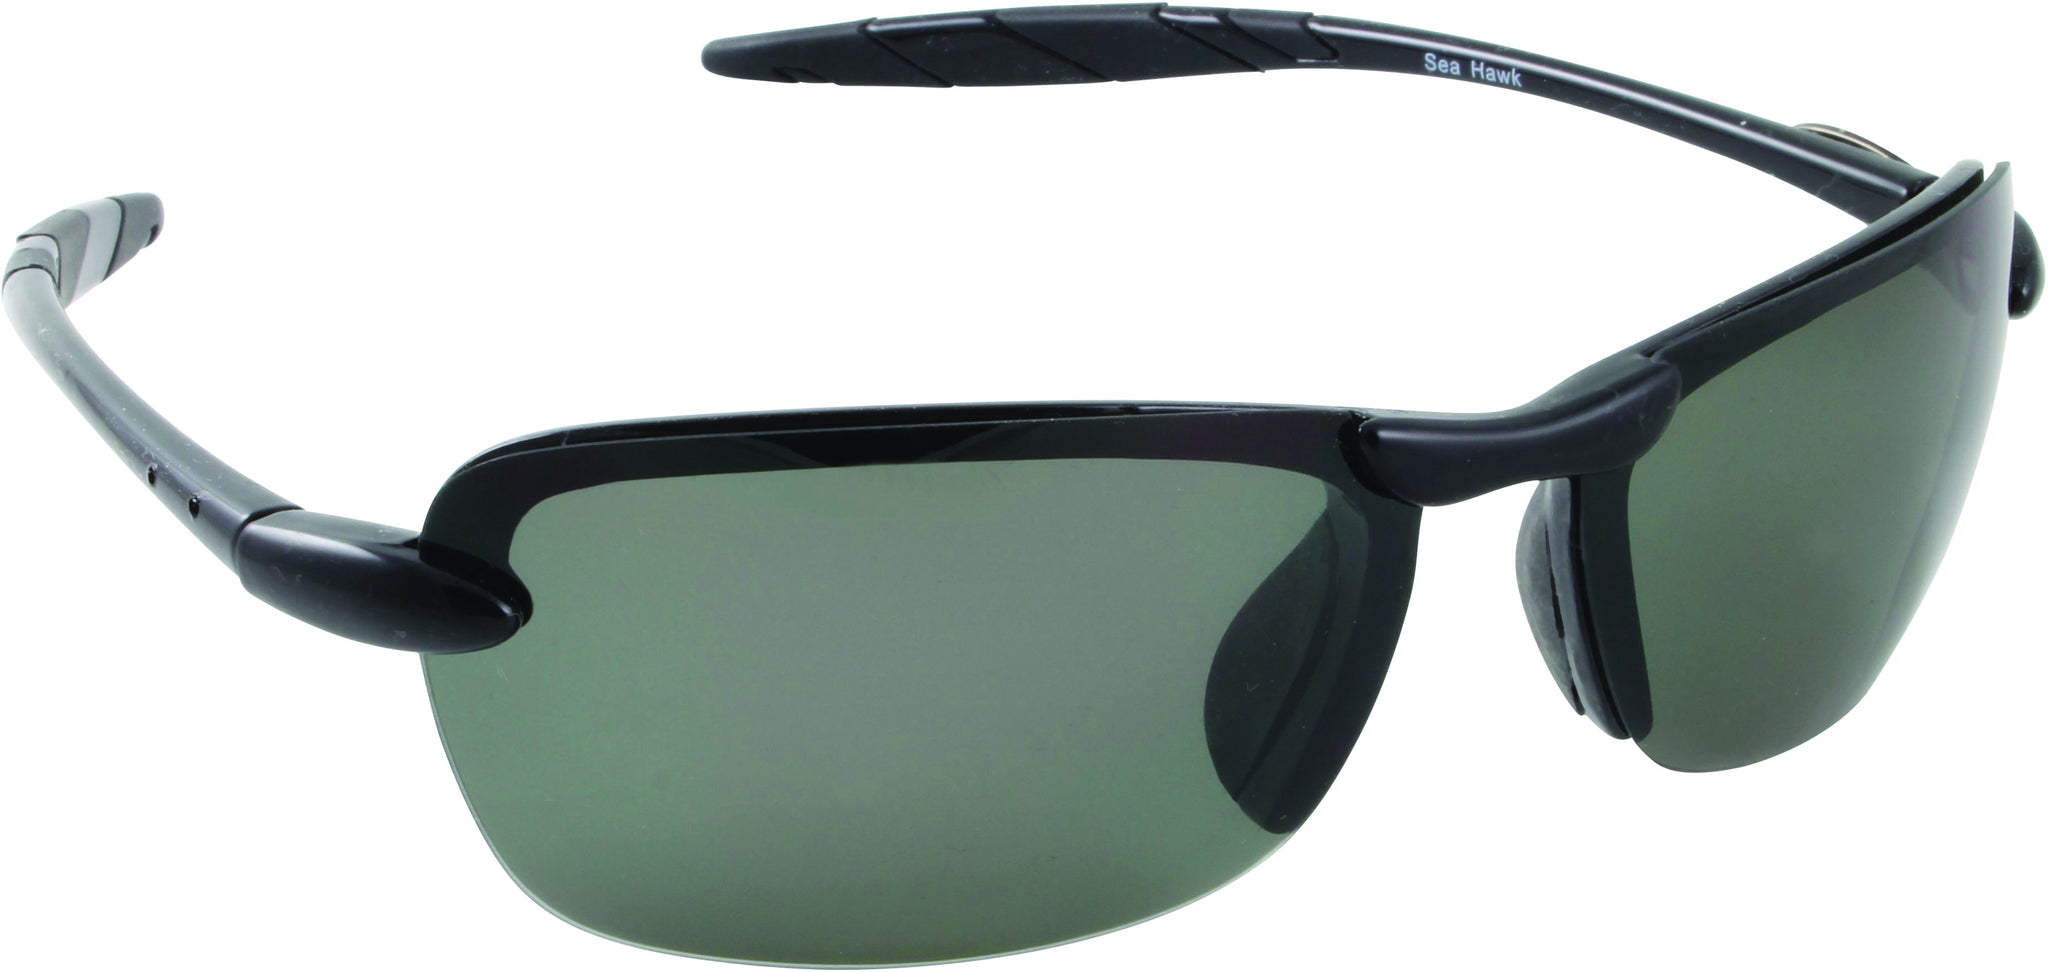 Sea Striker 224 Sea Hawk Sunglasses Black Frame/Grey Mirror Polarized